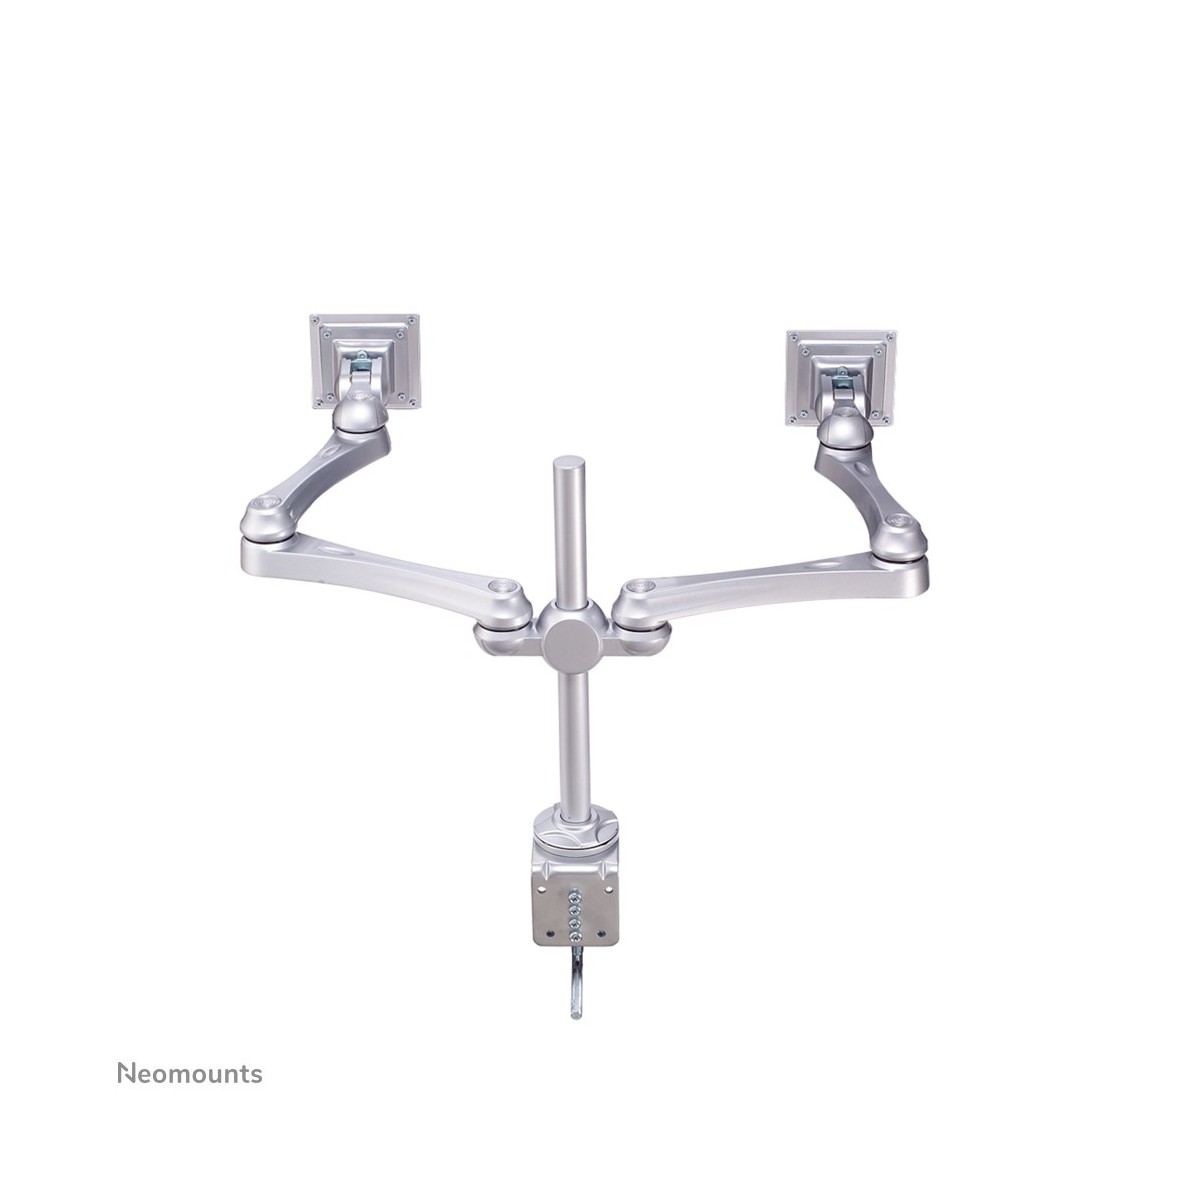 Neomounts flat screen desk mount - Clamp - 7 kg - 25.4 cm (10") - 76.2 cm (30") - 100 x 100 mm - Silver